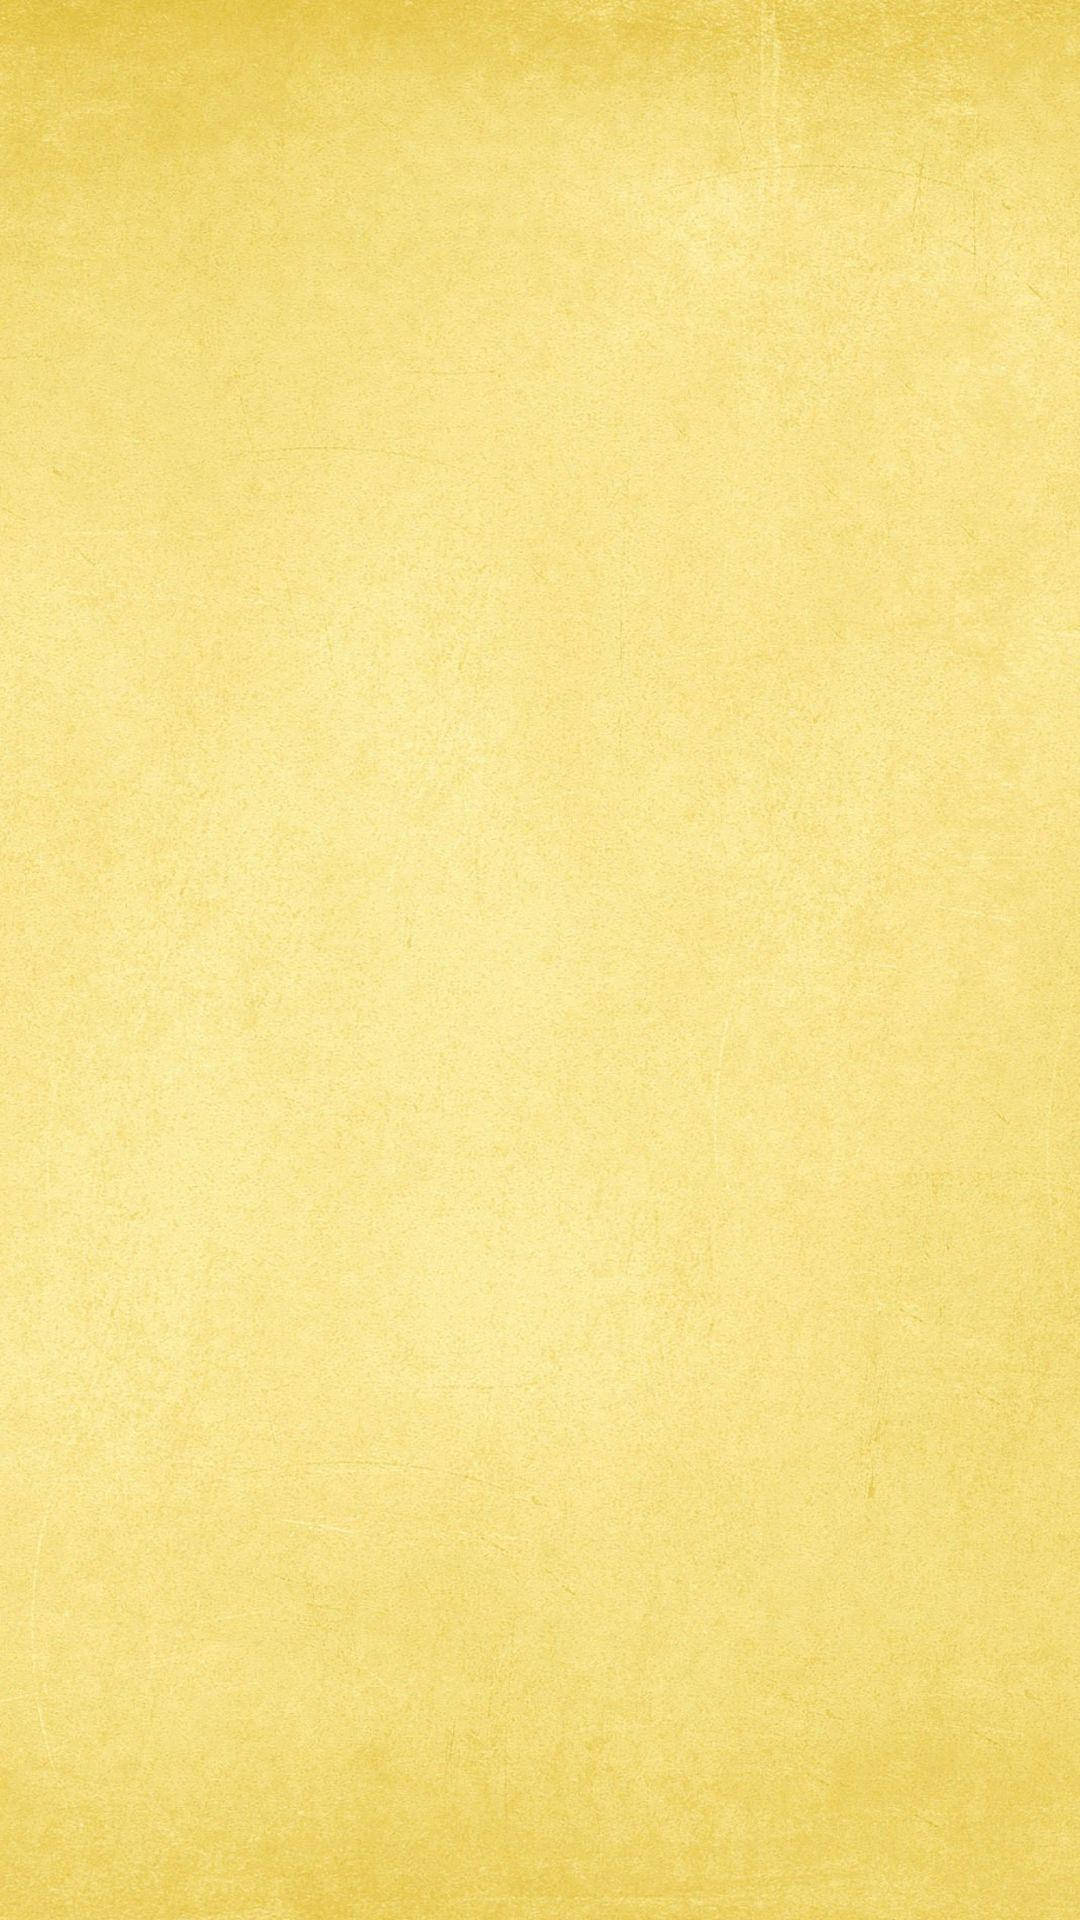 Textured Plain Yellow Phone Wallpaper